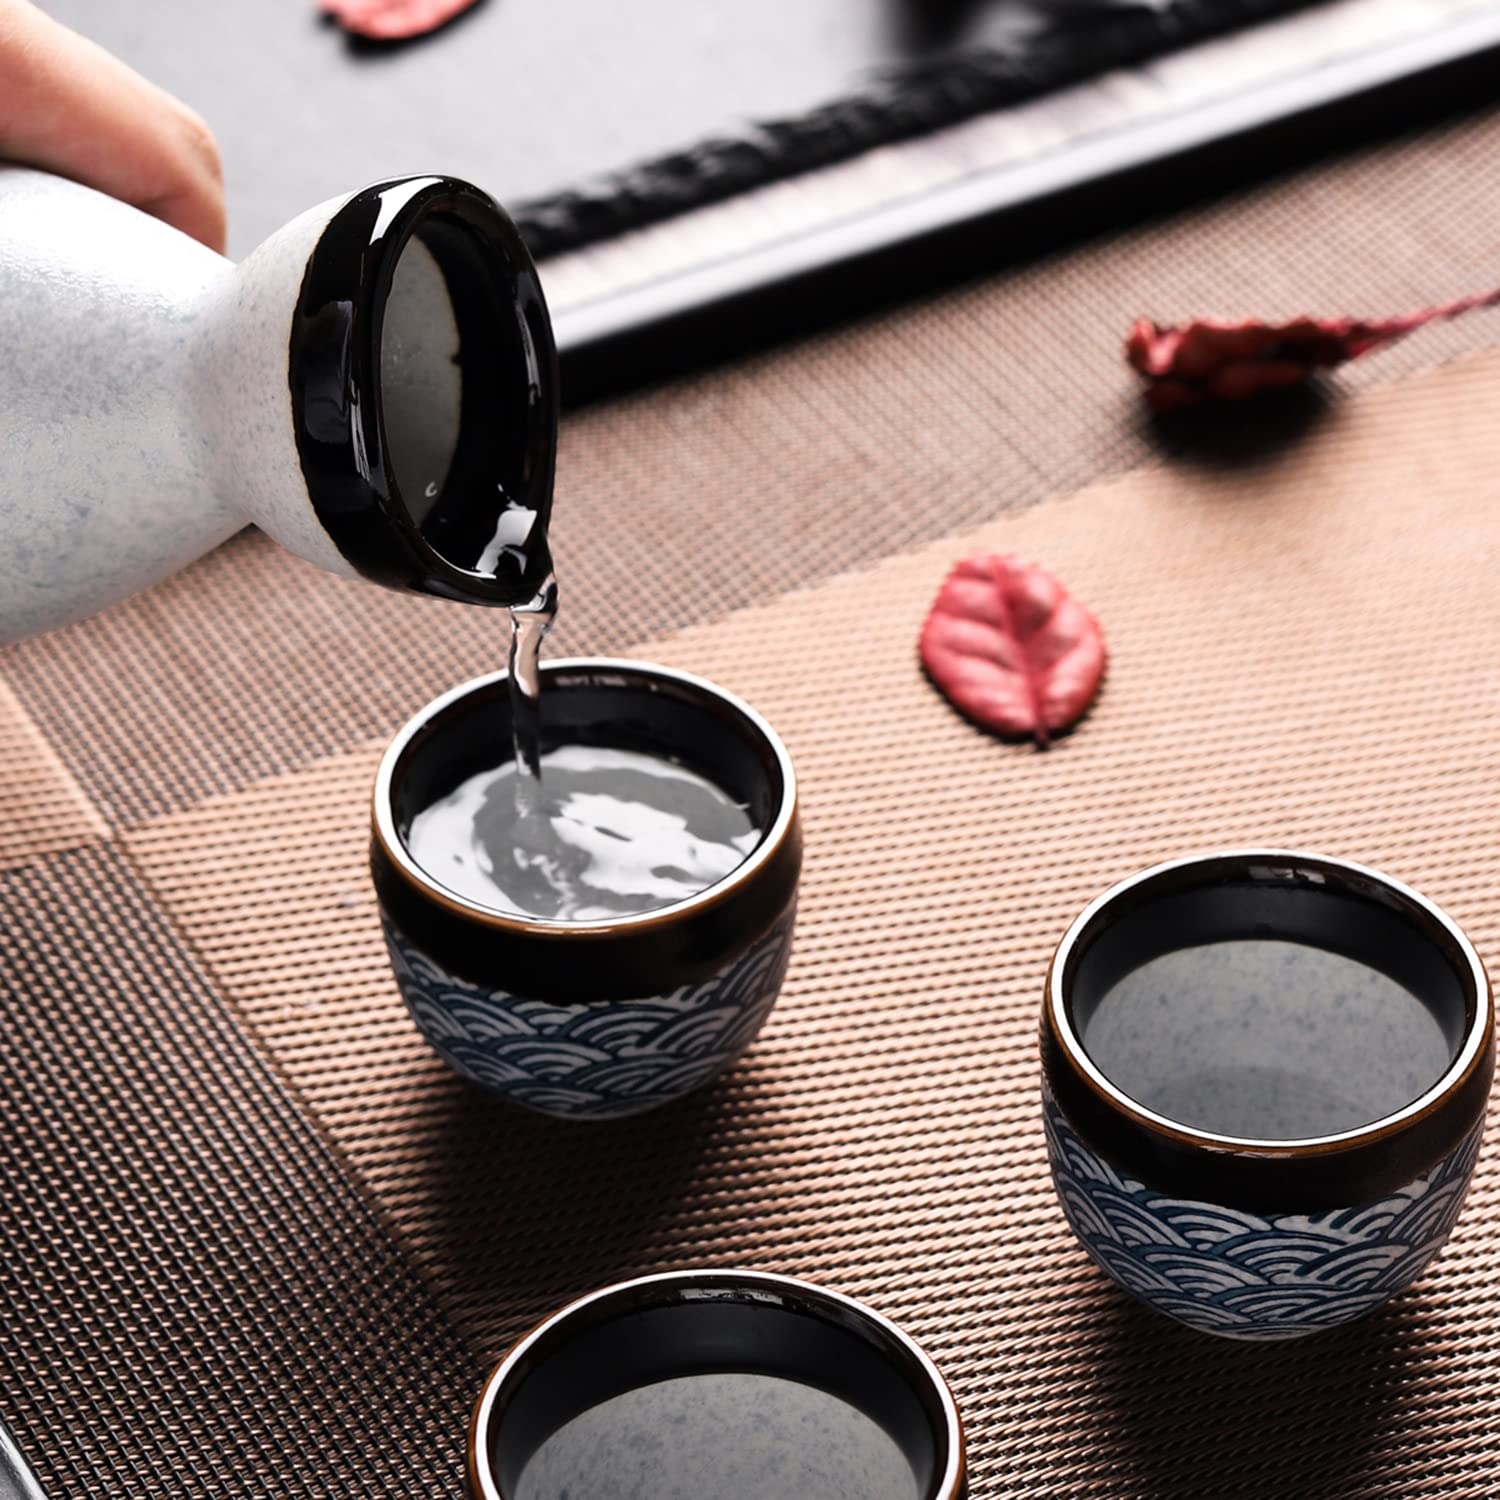 Sake Set Ceramic Japanese Sake Set of 7 include 1 Sake bottle 6 Sake Cups for Hot or Cold Sake at Home or Restaurant